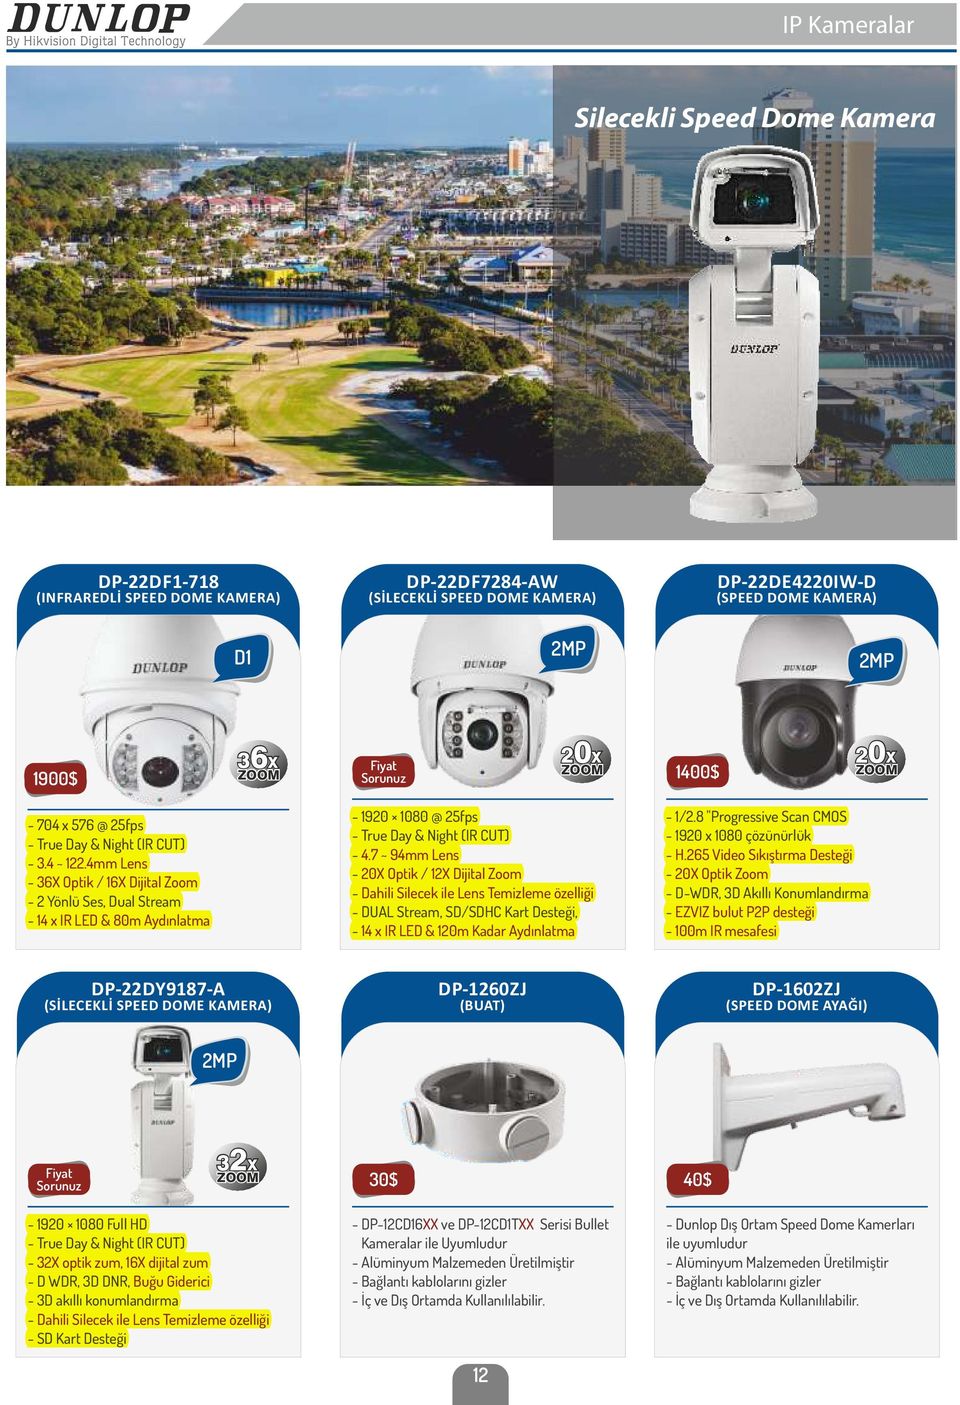 4mm Lens - 36X Optik / 16X Dijital Zoom - 2 Yönlü Ses, Dual Stream - 14 x IR LED & 80m Aydınlatma - 1920 1080 @ 25fps - True Day & Night (IR CUT) - 4.